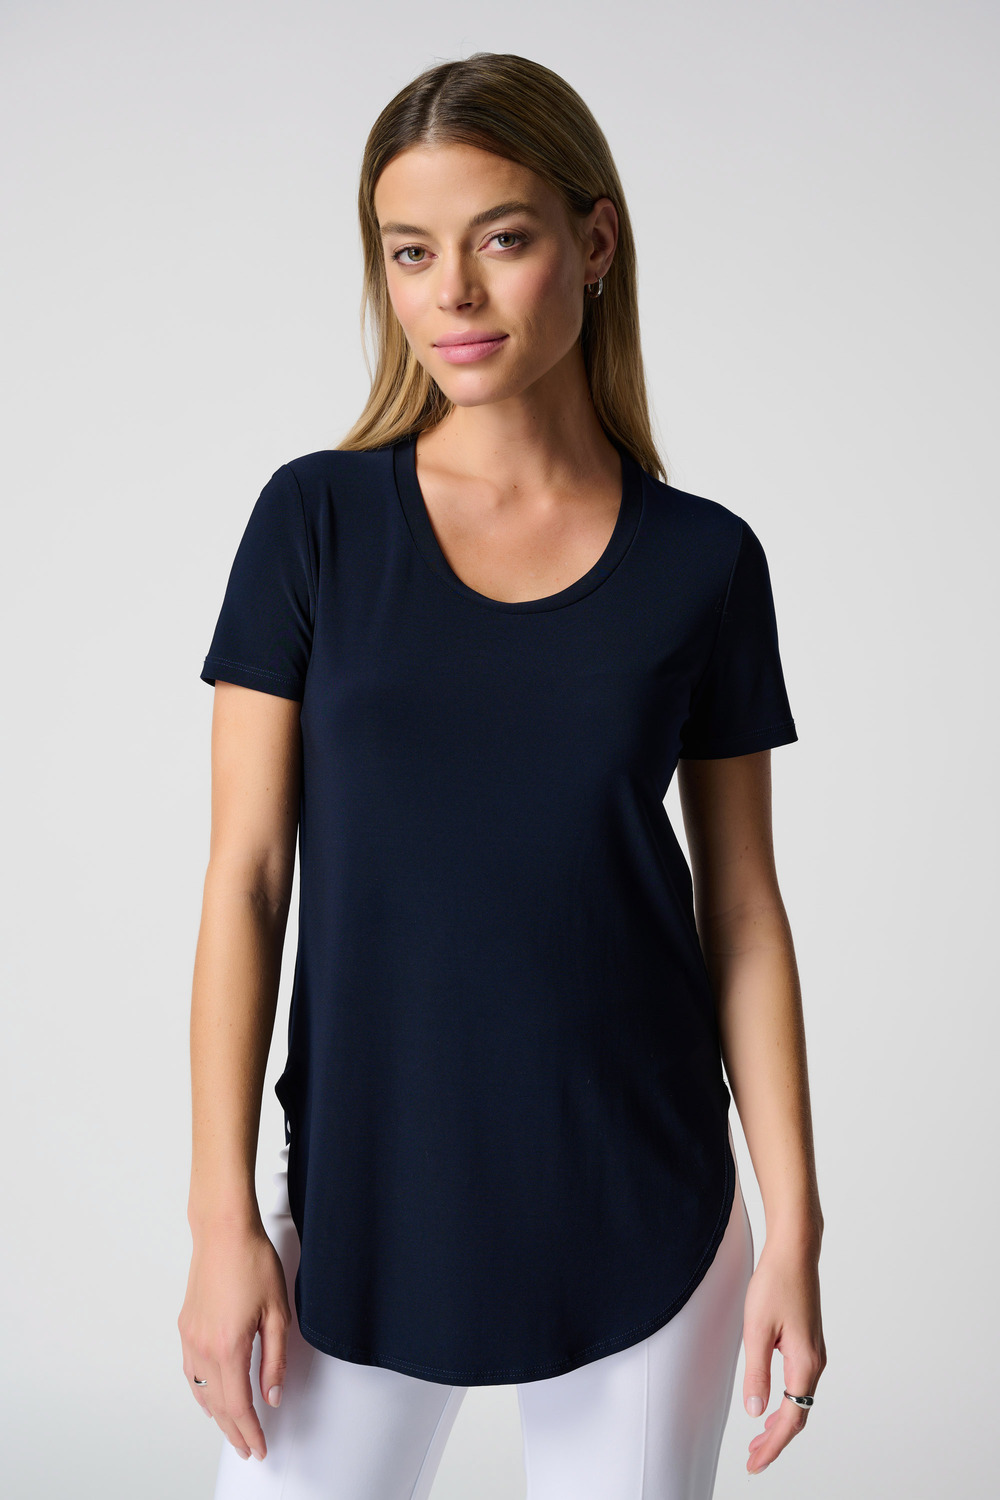 Longline T-Shirt Style 183220. Midnight Blue 40